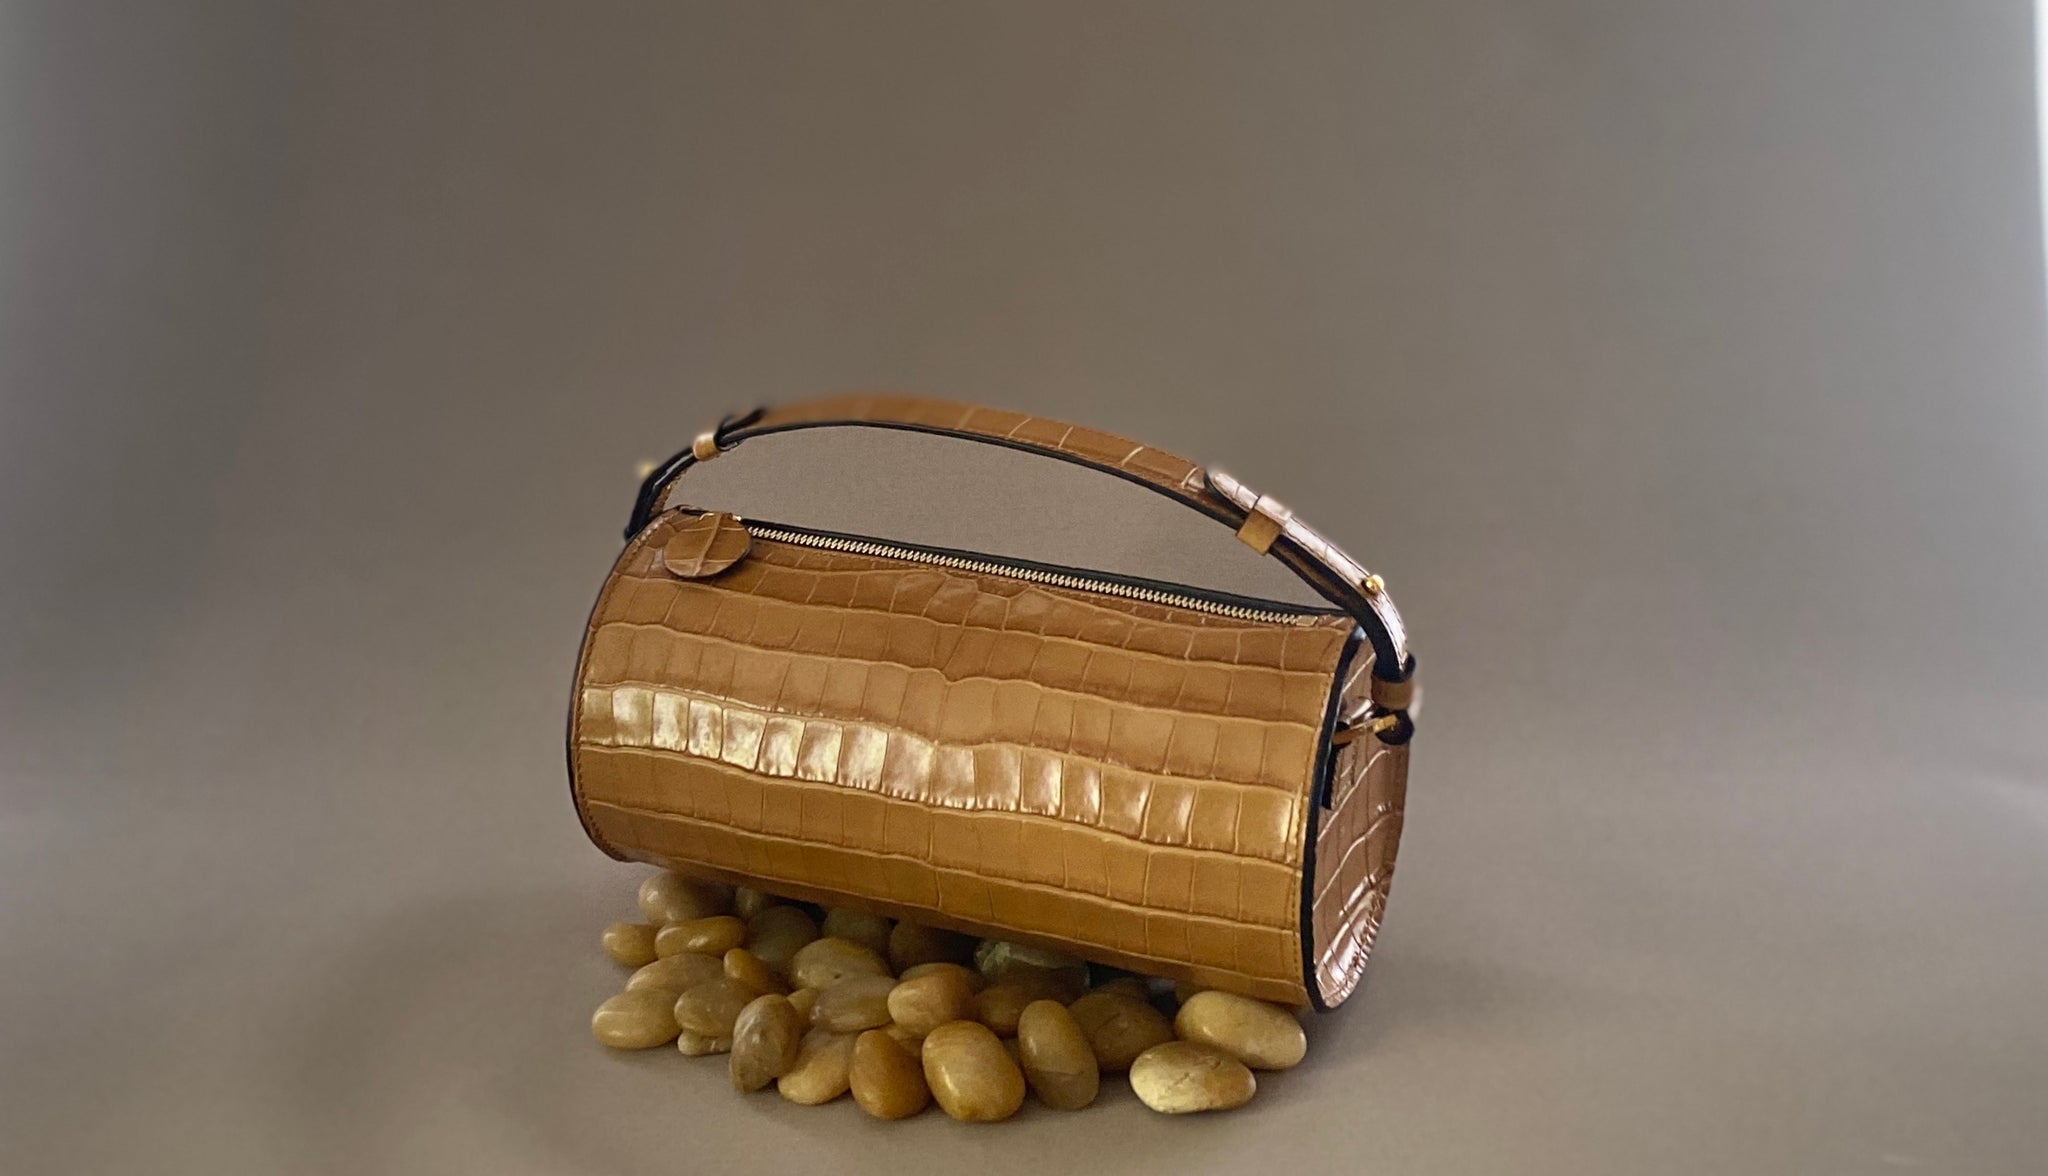 Contemporary Bags and Accessories by Scottish Designer C.Nicol® – CNicol